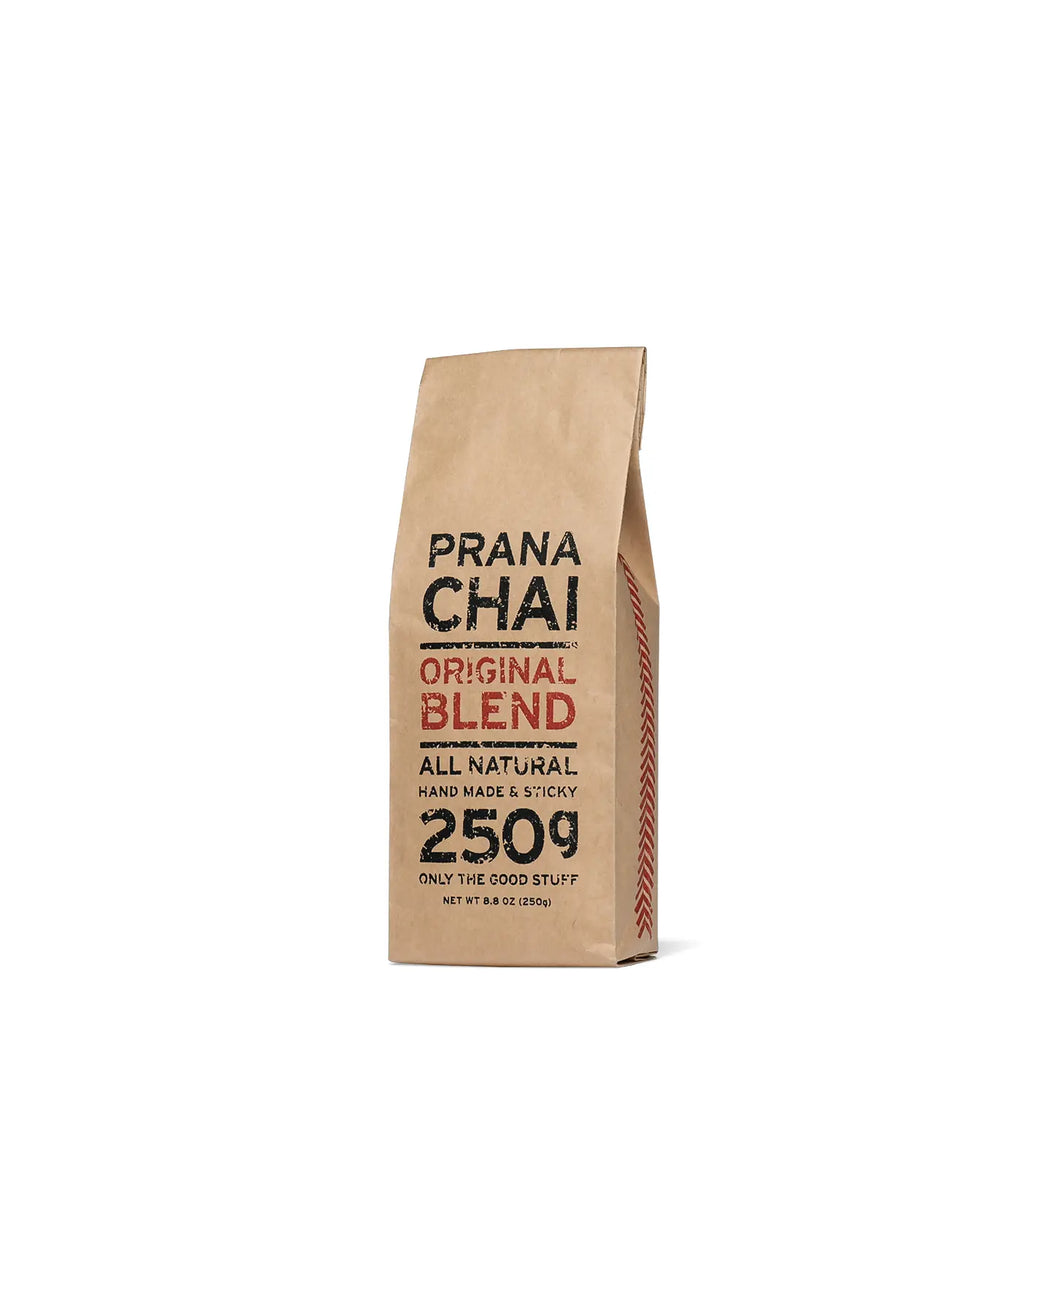 A 250g bag of Prana Chai blend